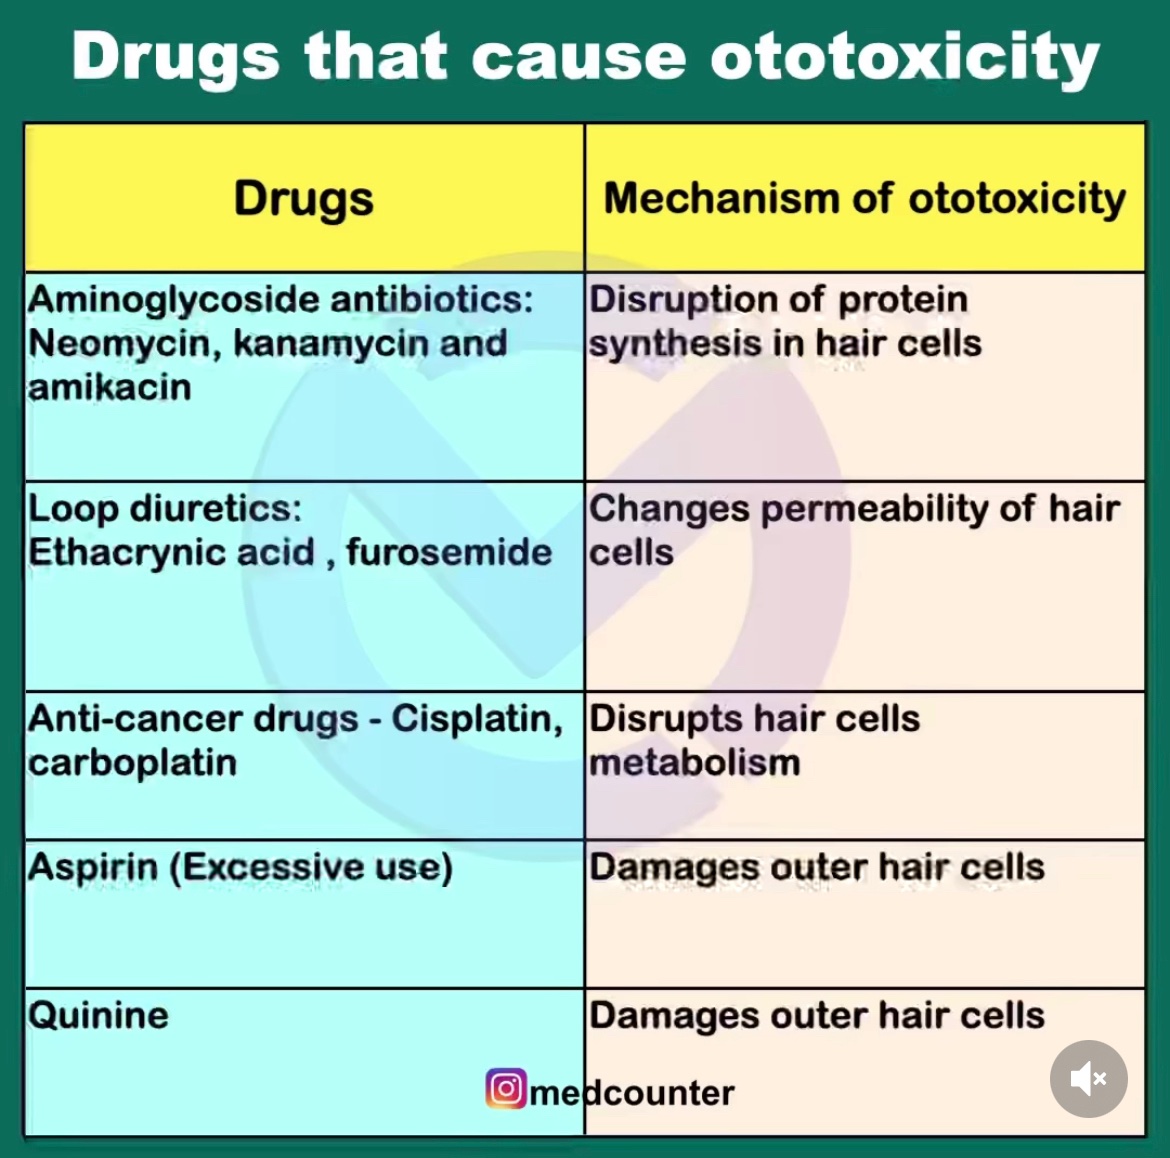 Drugs that cause ototoxicity (medinaz academy) #BJHM #Meded #Medtwitter #pharmacology #medpeds #medstudenttwitter